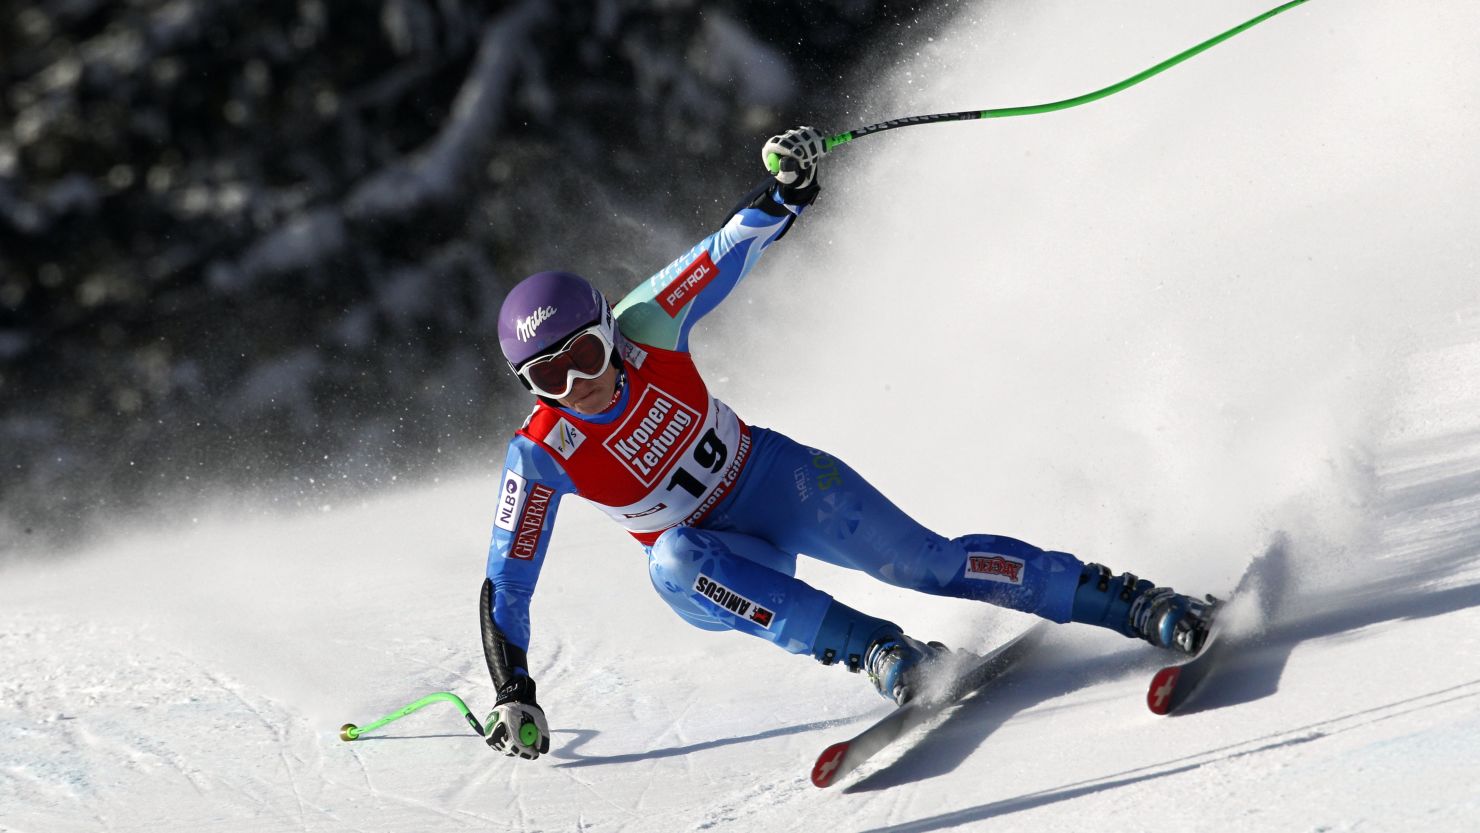 Slovenian skier Tina Maze won the World Cup women's Super G race at St. Anton on January 13.